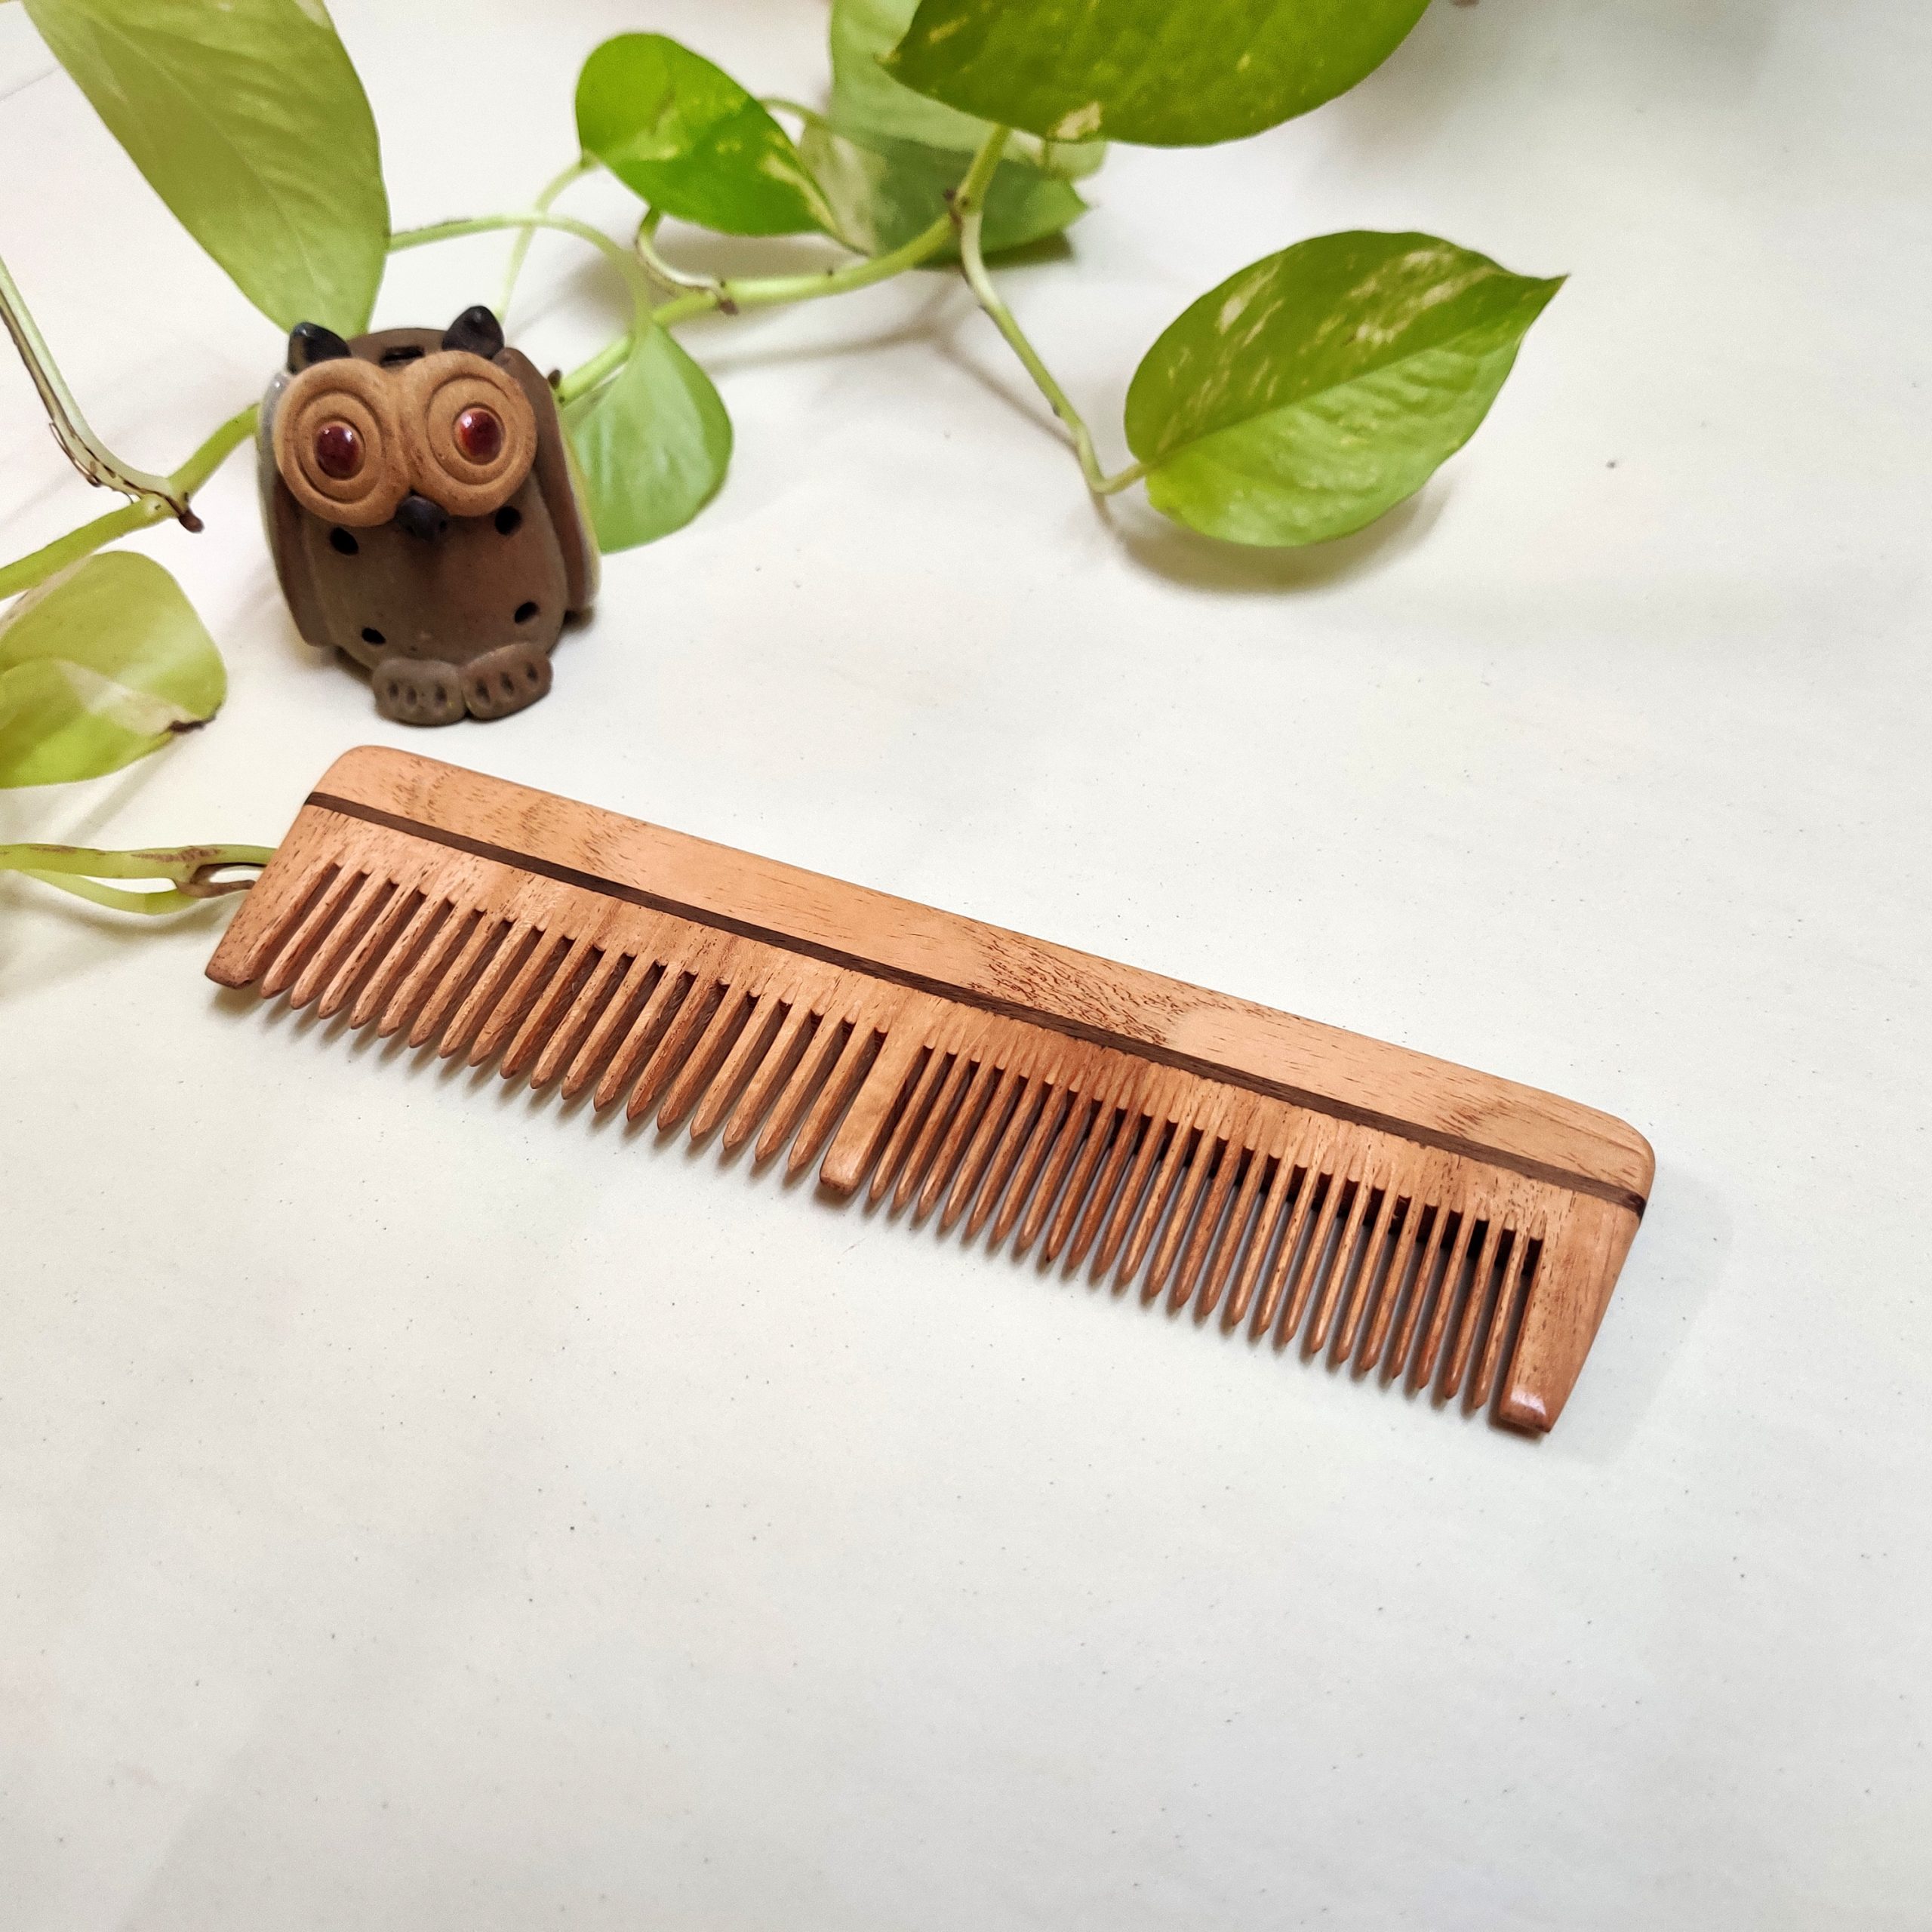 Dual teeth comb made with neem